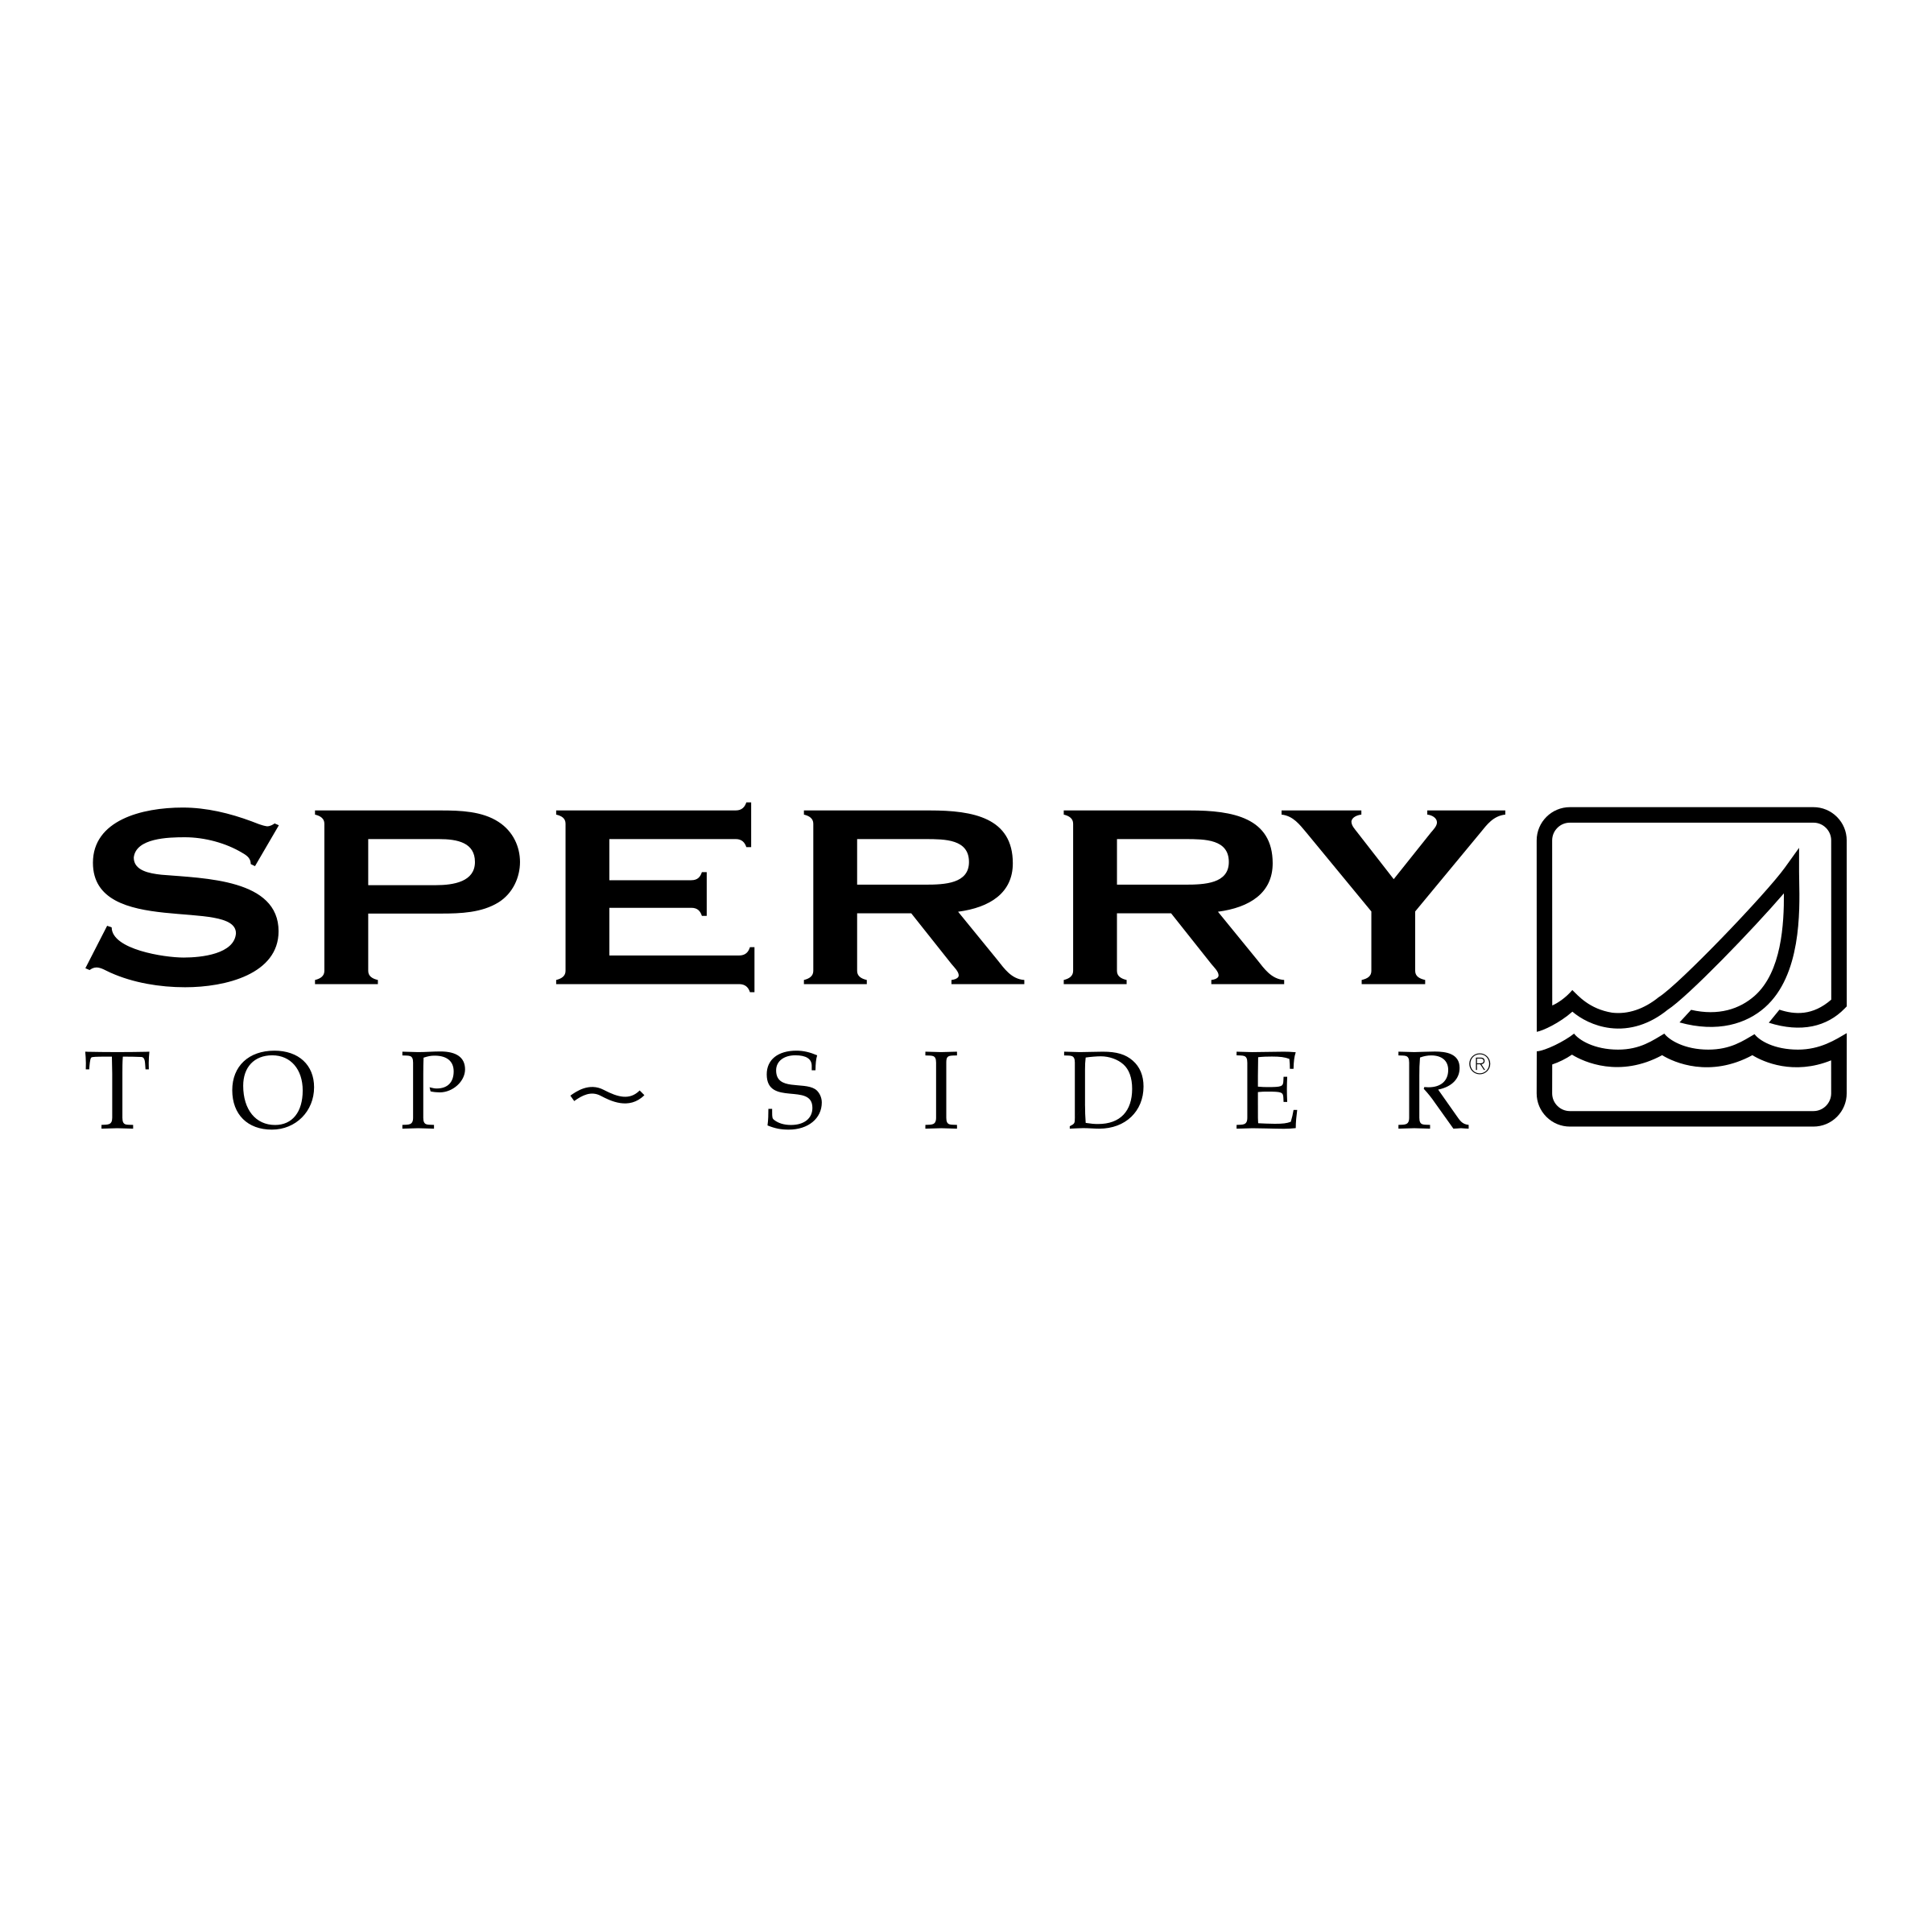 sperry-1-logo-png-transparent.png